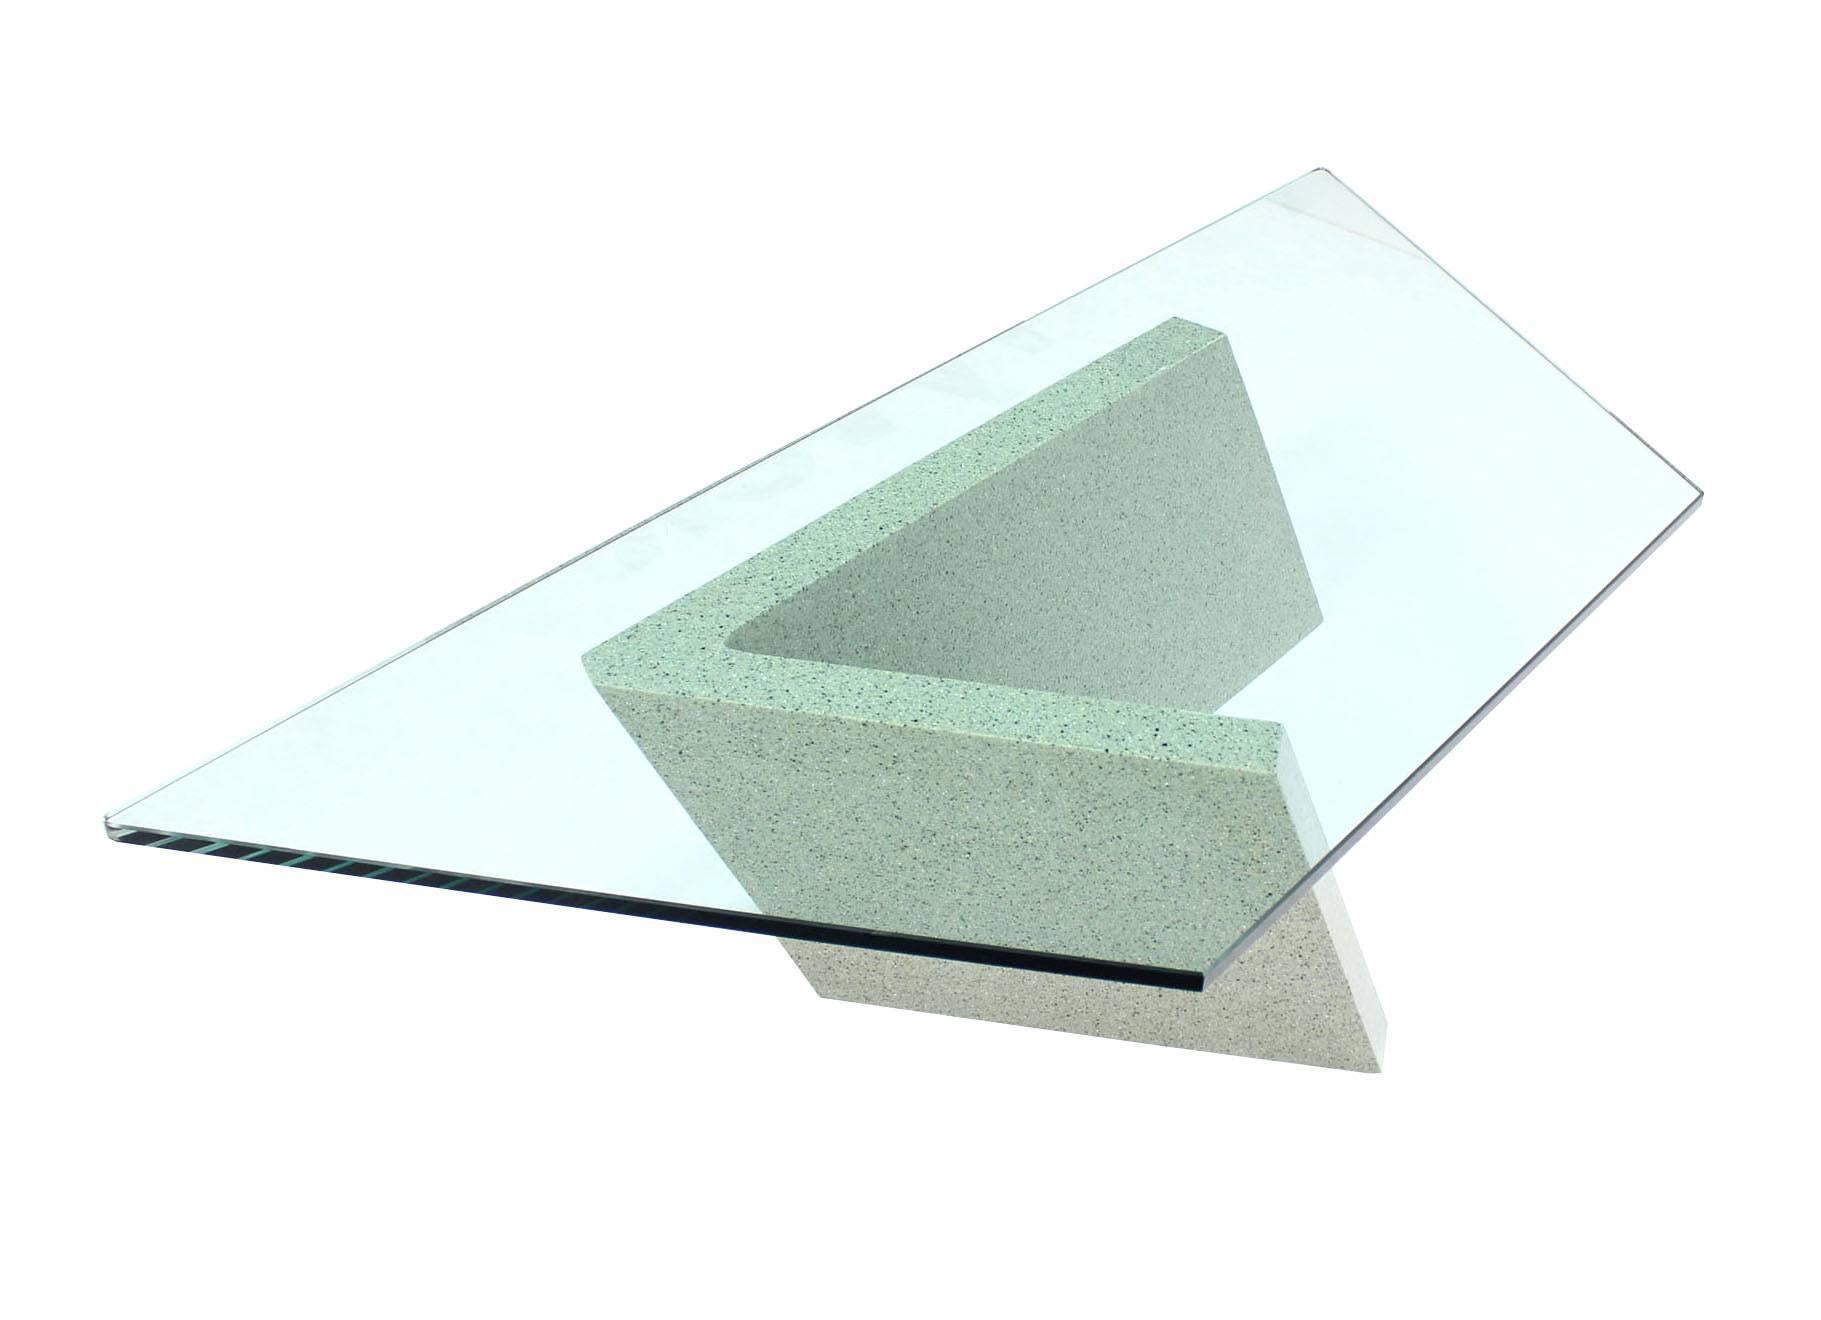 Molded Geometrical Irregular  Trapezoid Shape Glass Top Coffee Center Table